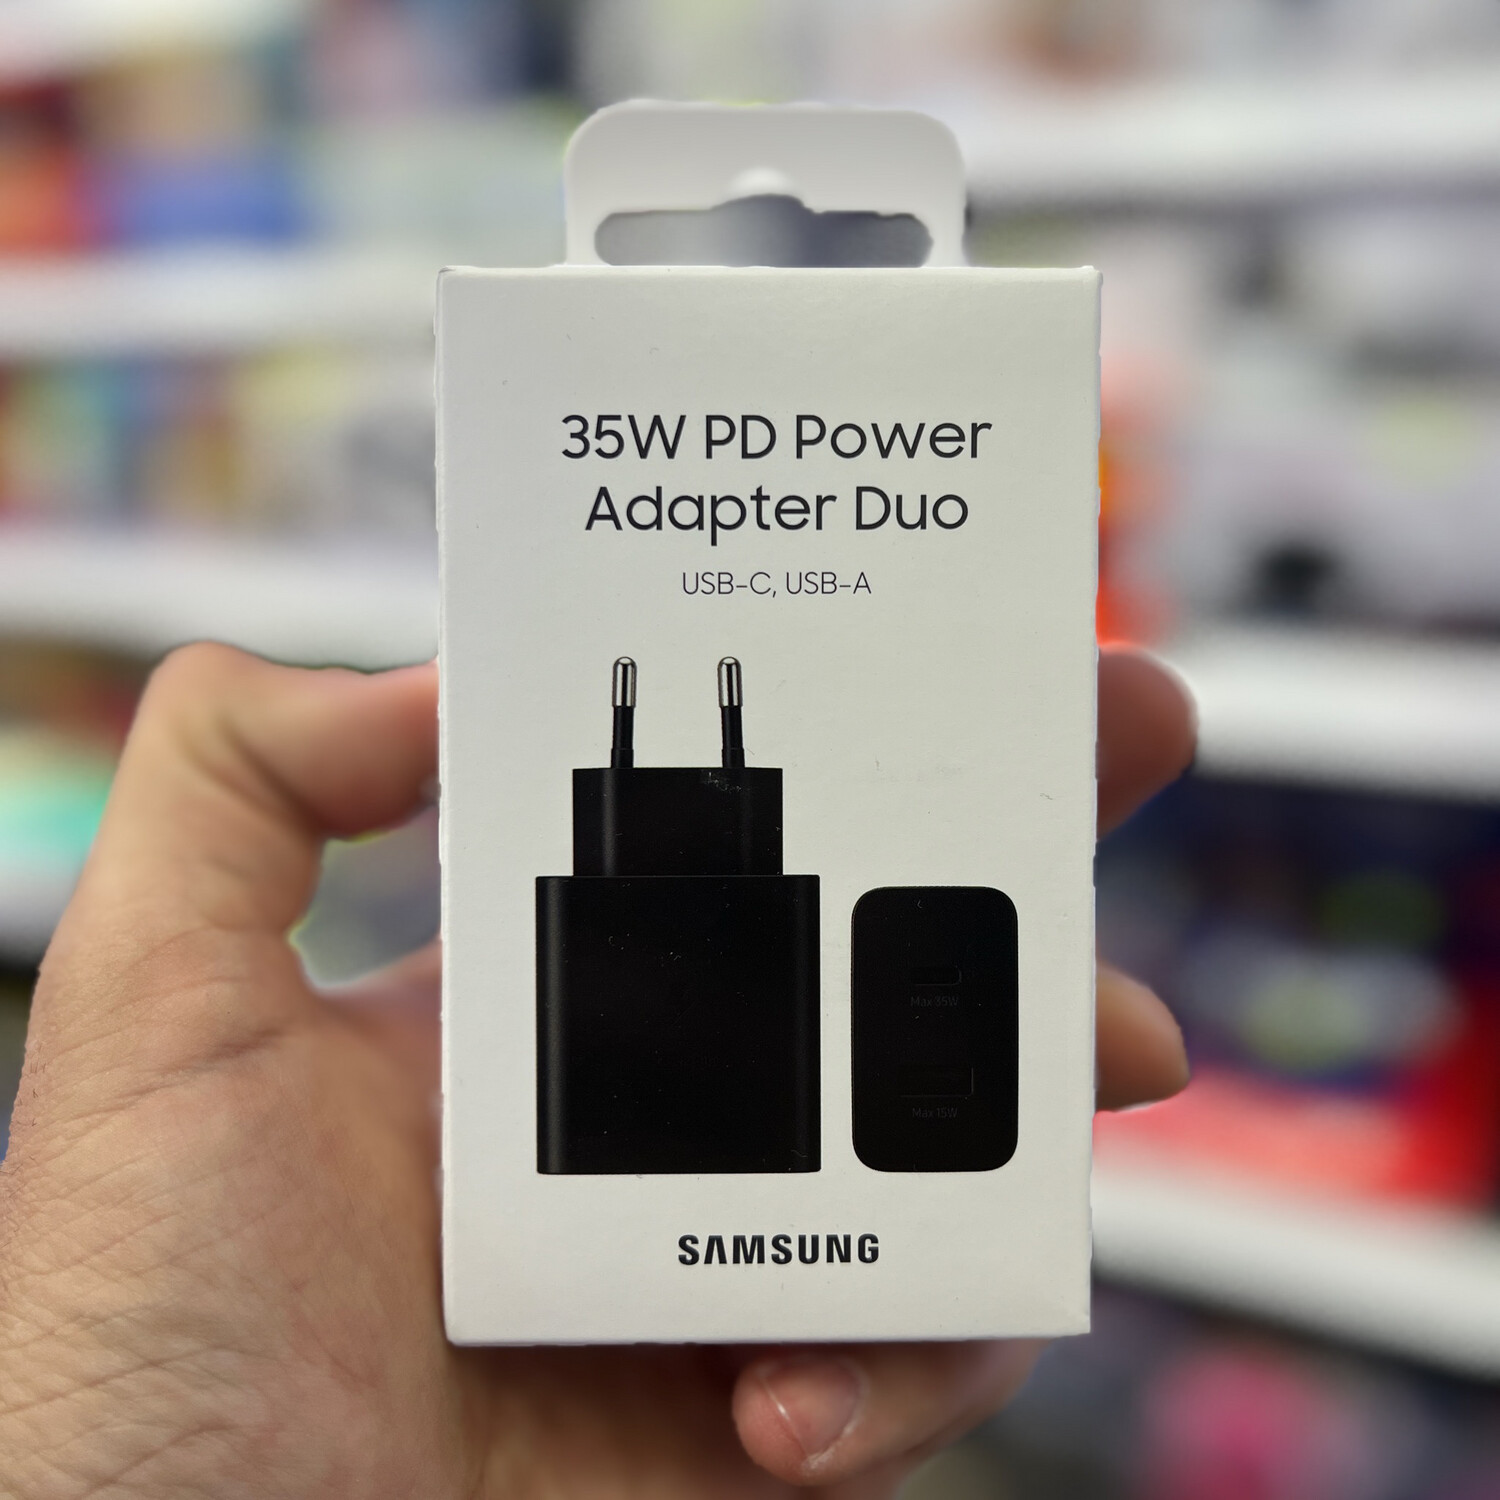 Samsung EP-TA220N Power Adapter Duo 35W, 2 porte USB (USB-C e USB-A), Nero